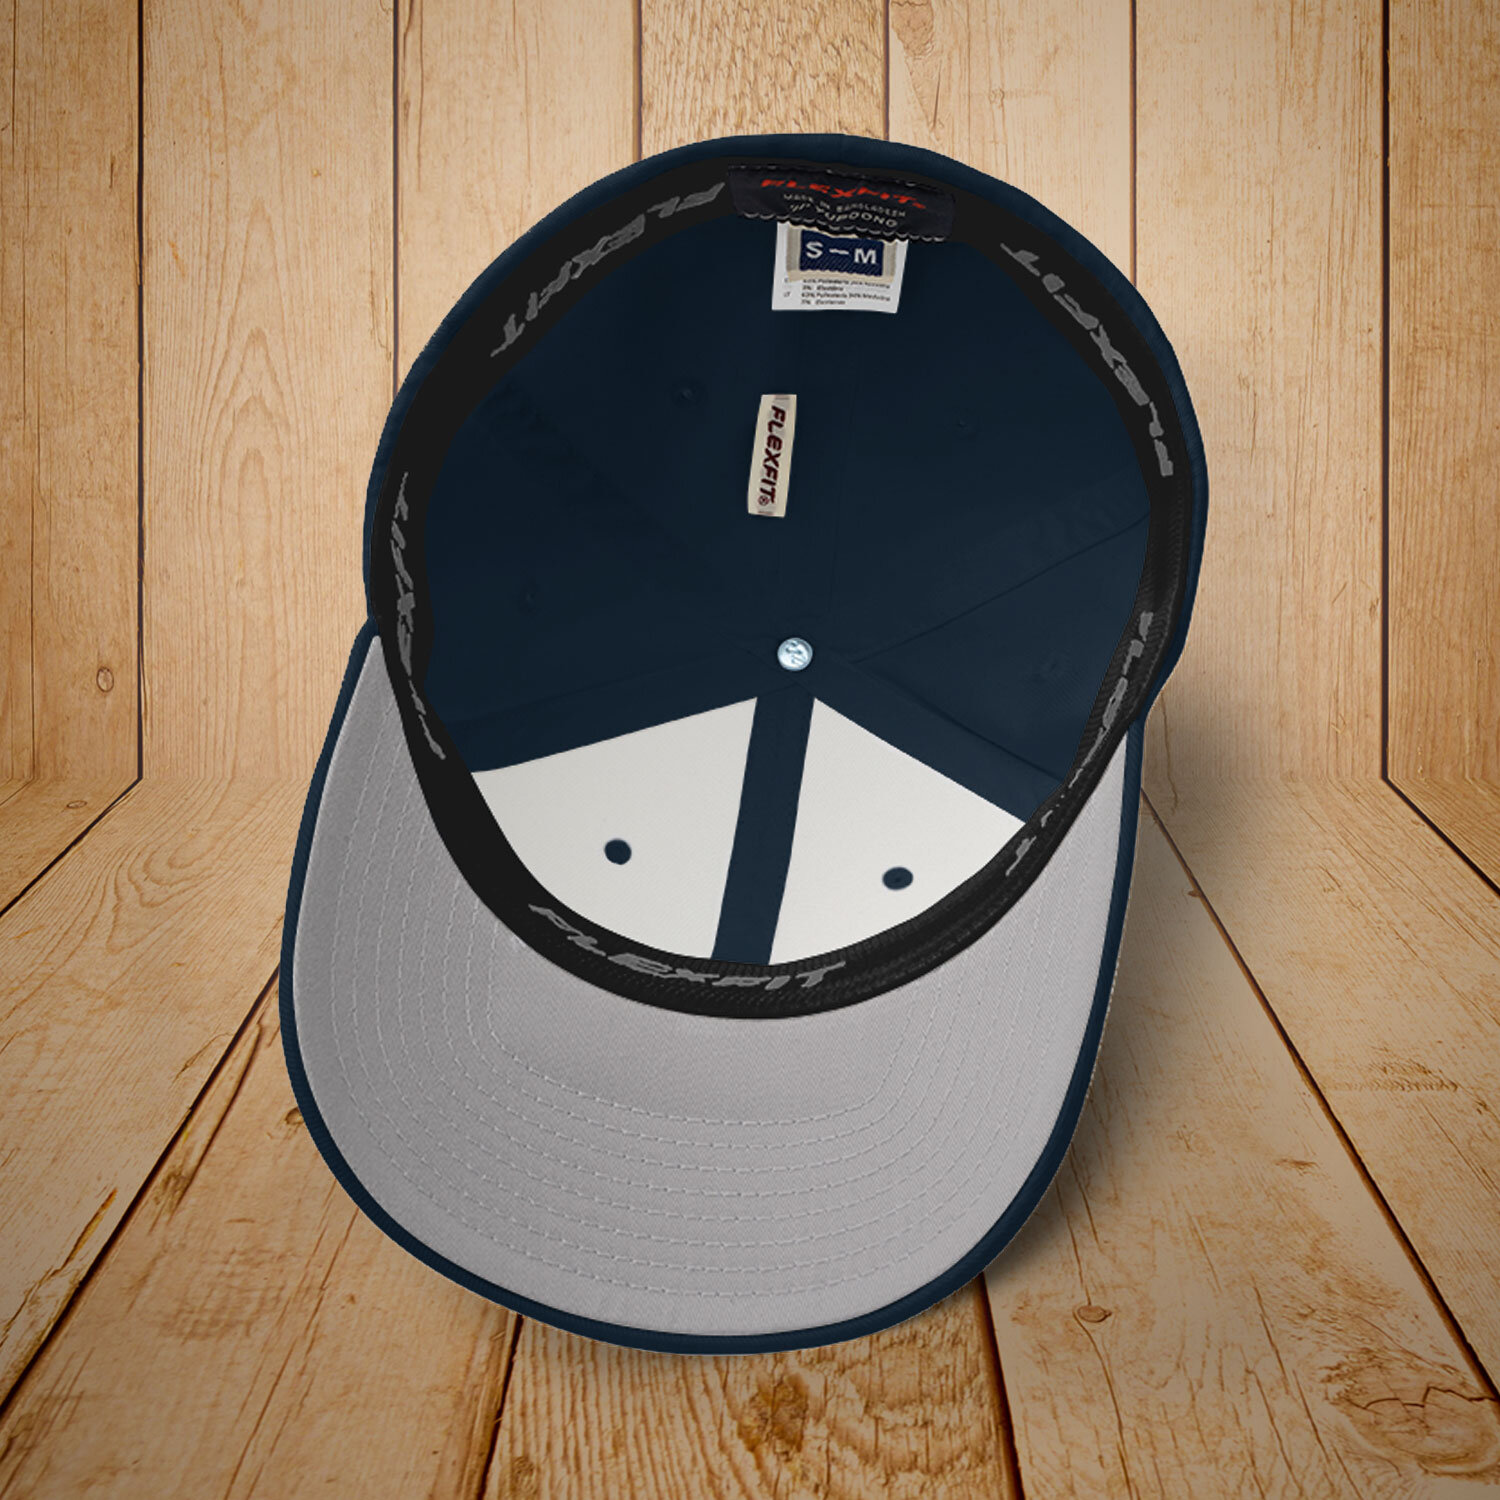 Tron Movie ENCOM Embroidered Patch Black Snapback Baseball Cap Hat EC01 